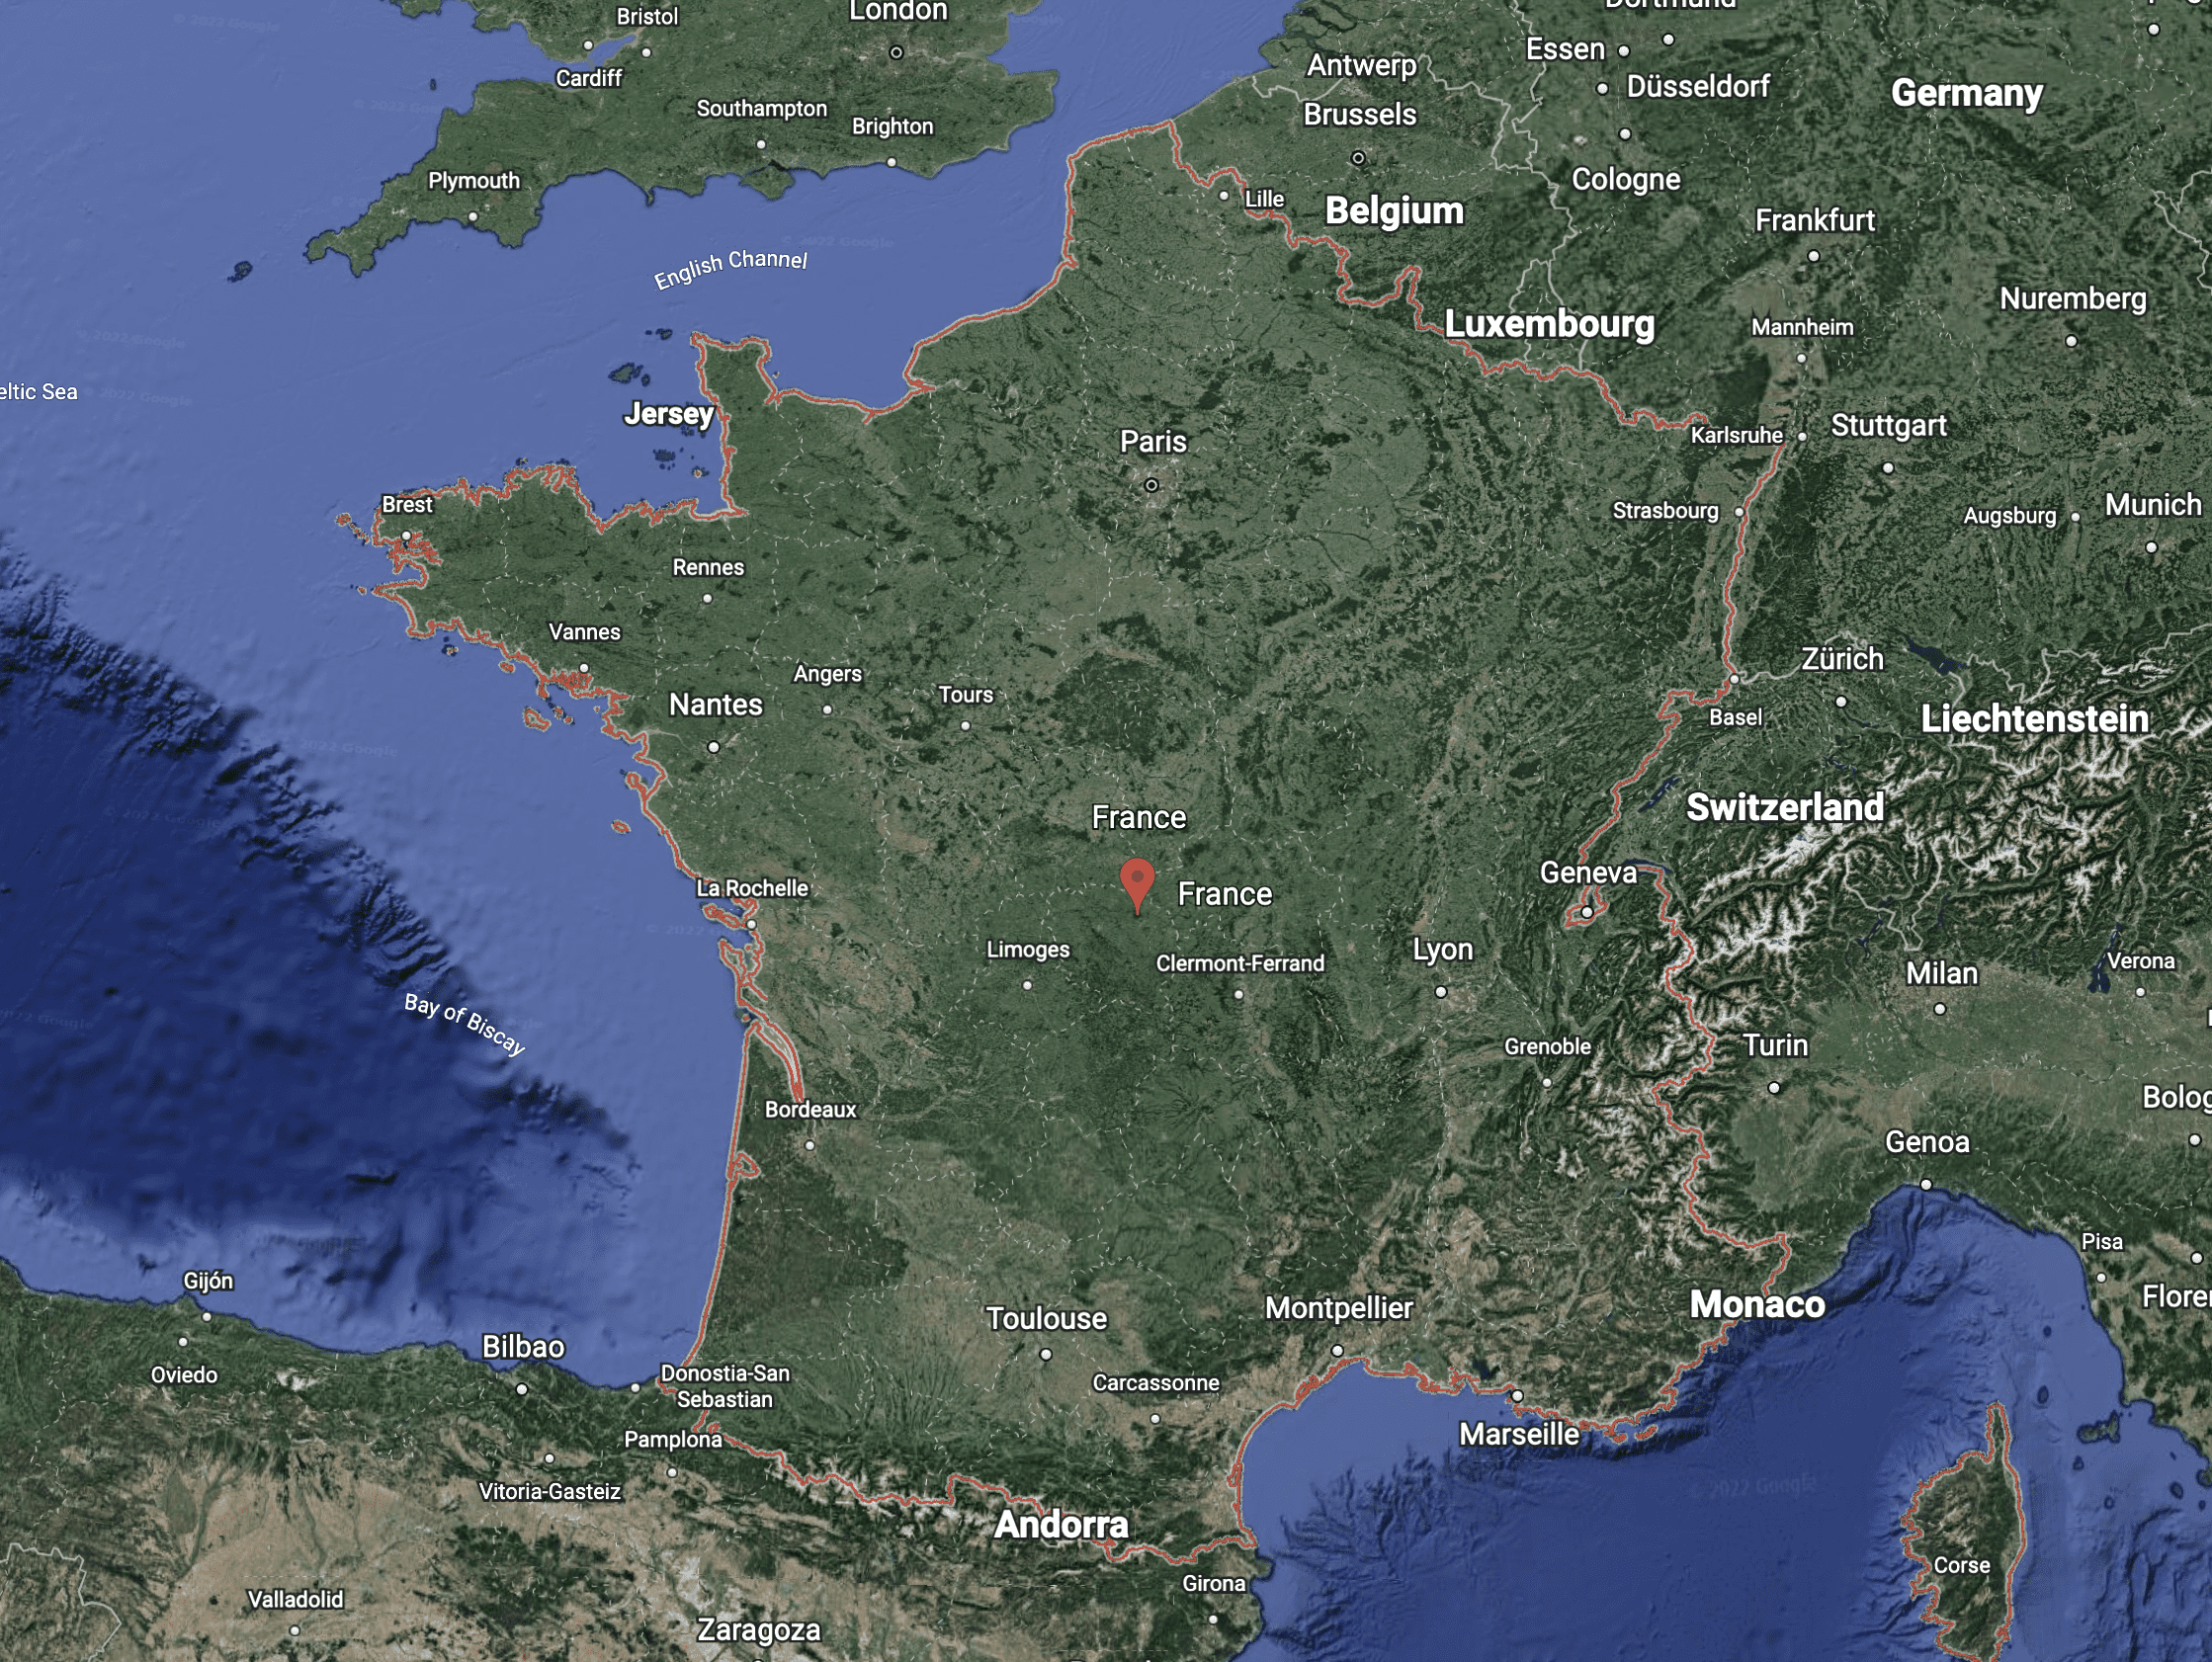 Google Earth Satellite Image of France